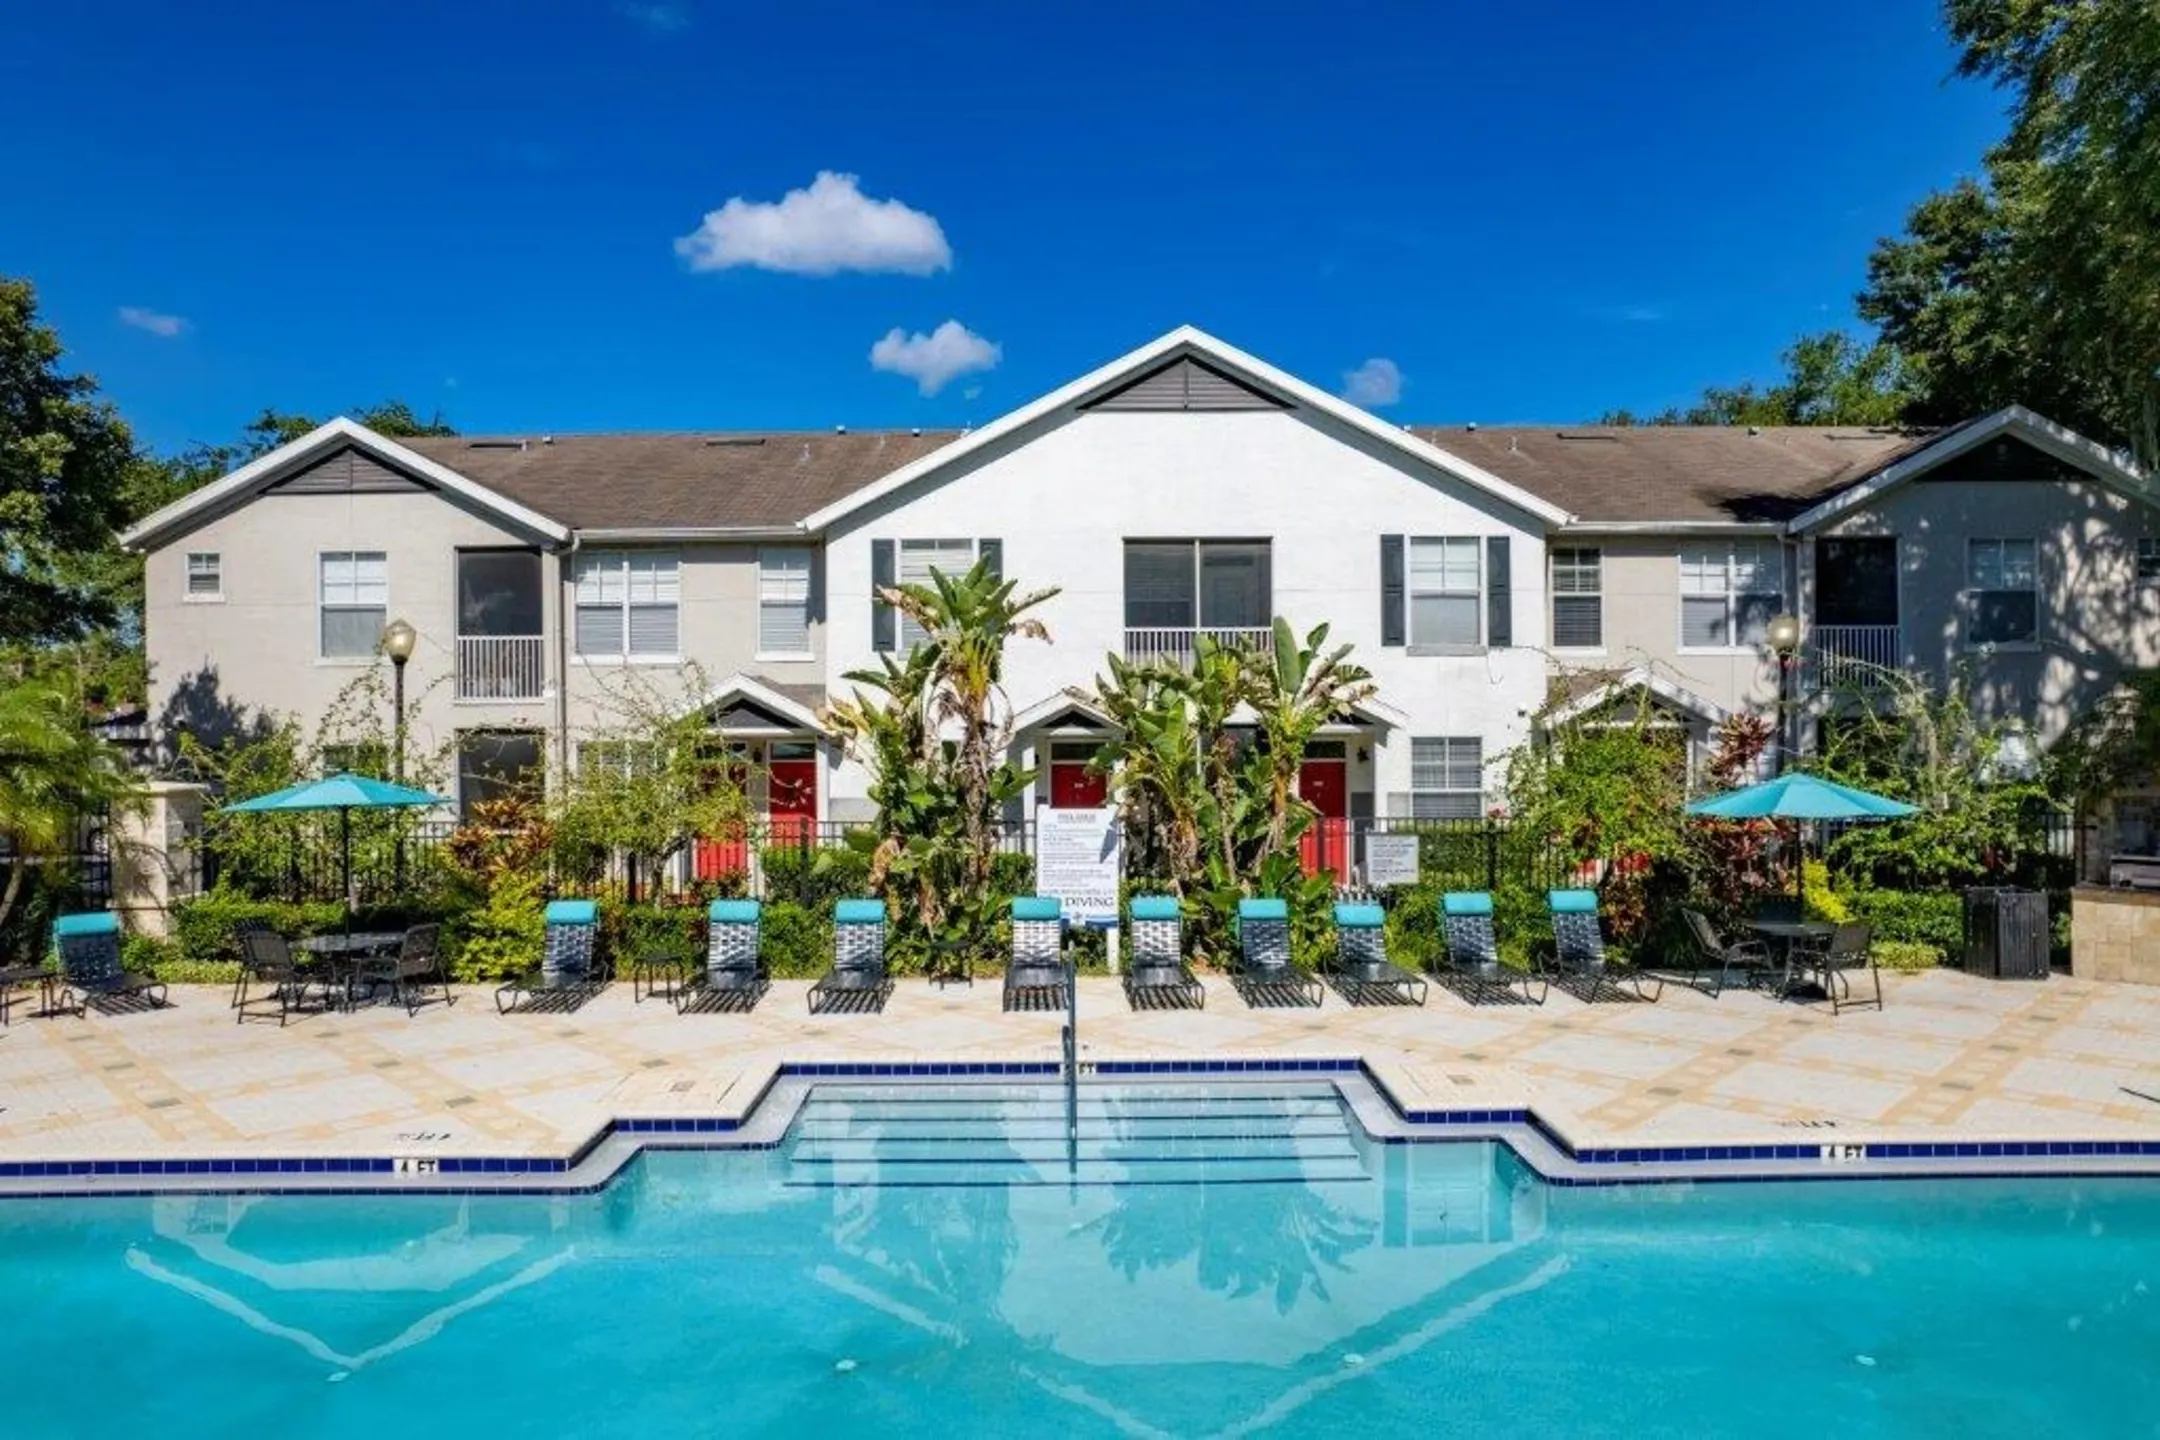 Pool - Rivertree Apartments - Riverview, FL